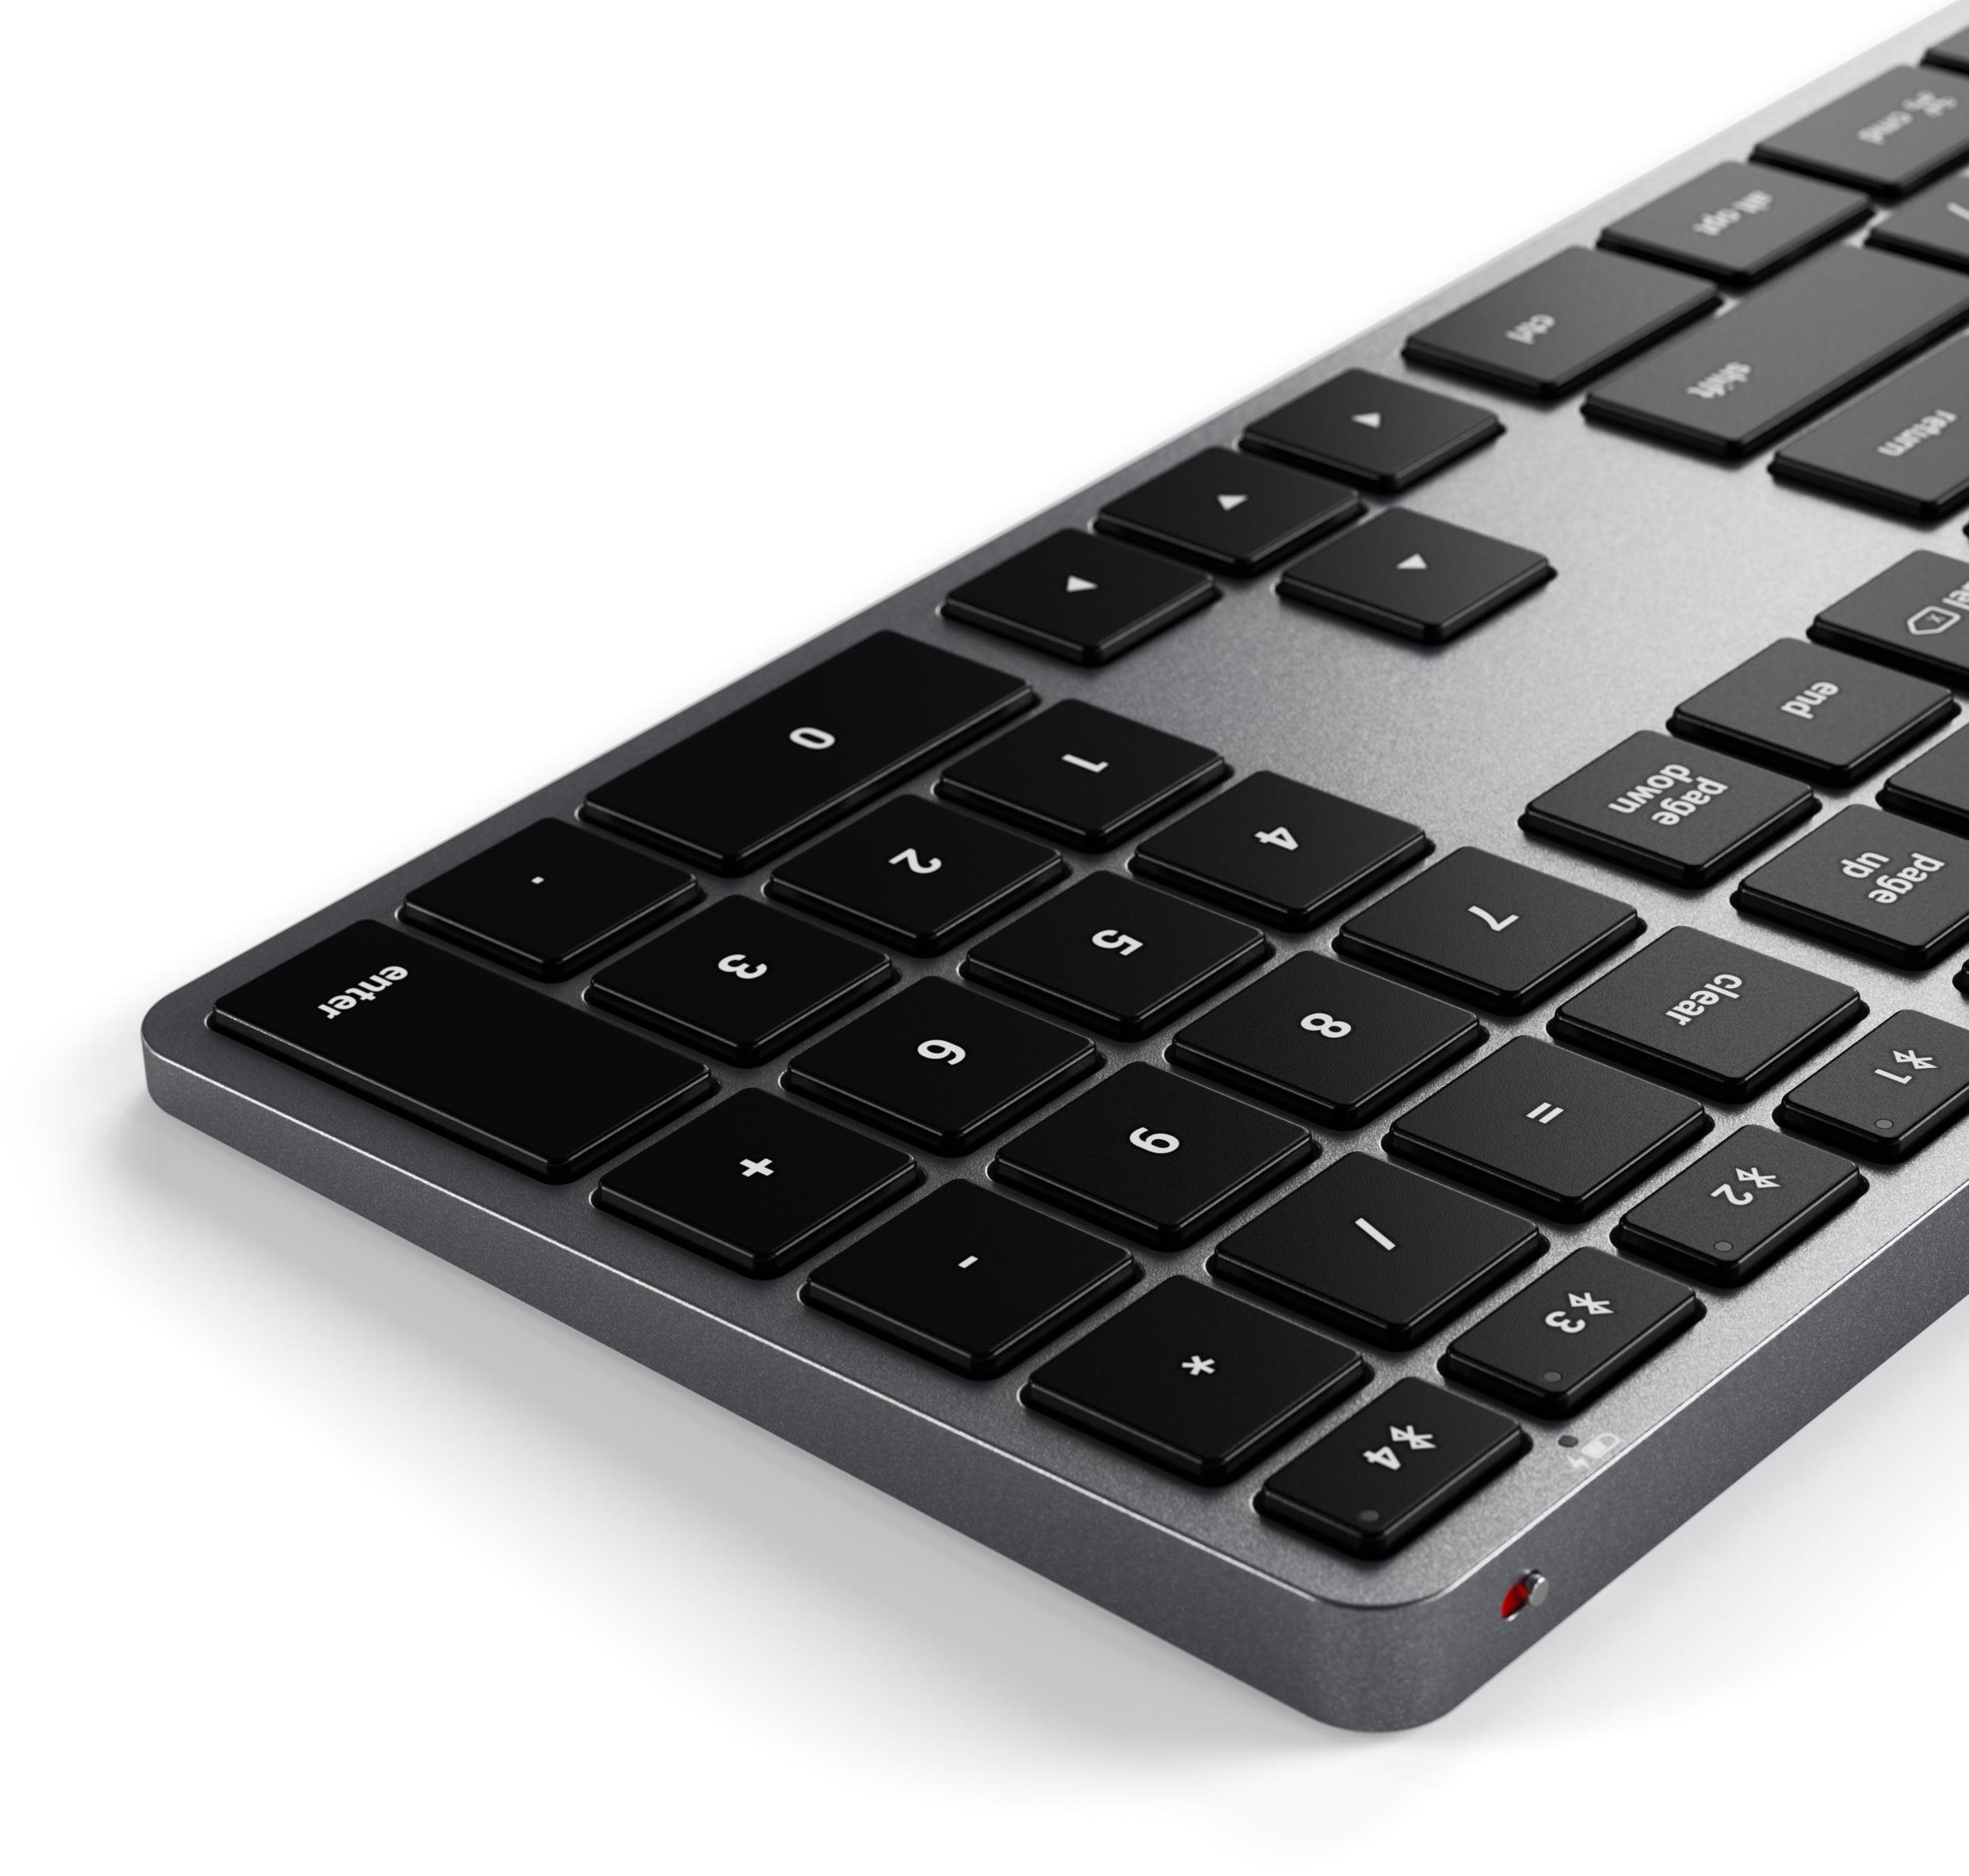 Keyboard Satechi Slim X3 Bluetooth BACKLIT Wireless Keyboard - Space Grey - US Features/technology